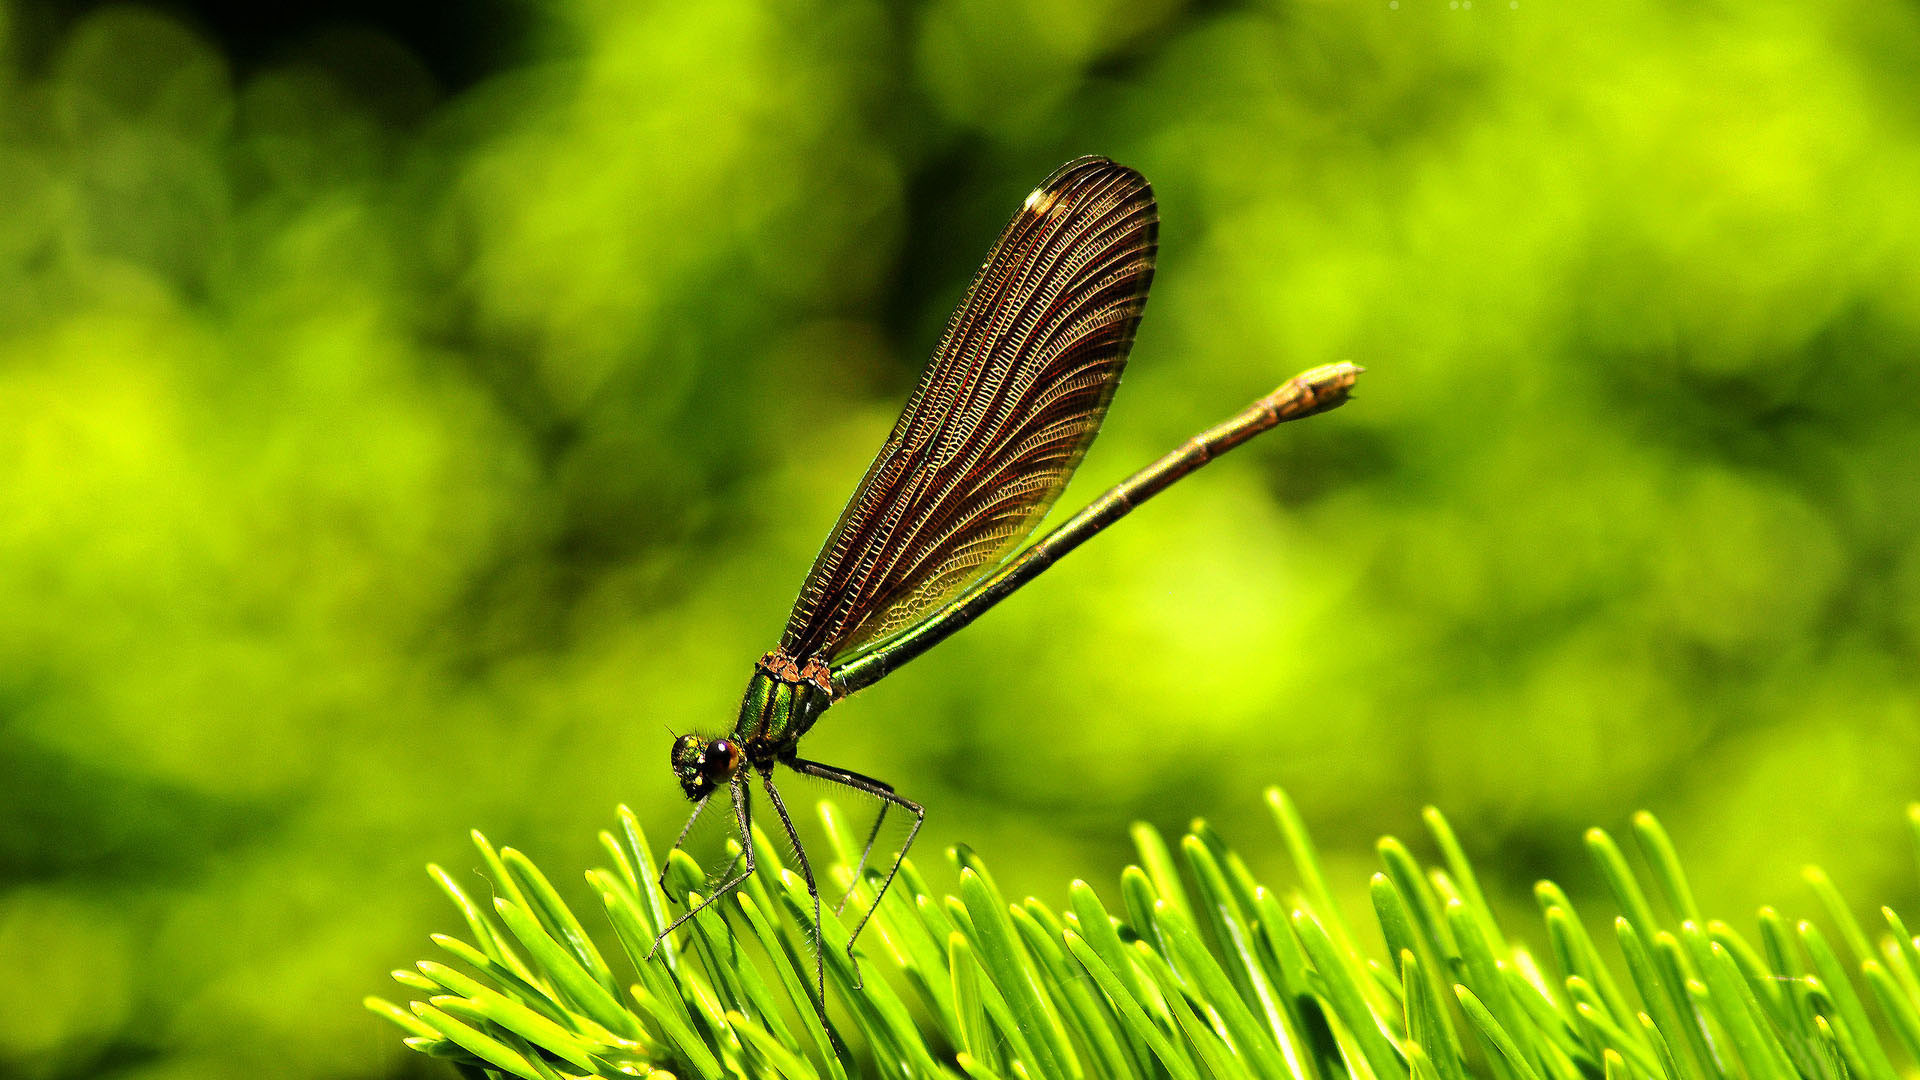 Hd pics photos best beautiful dragon fly macro nature hd quality desktop background wallpaper